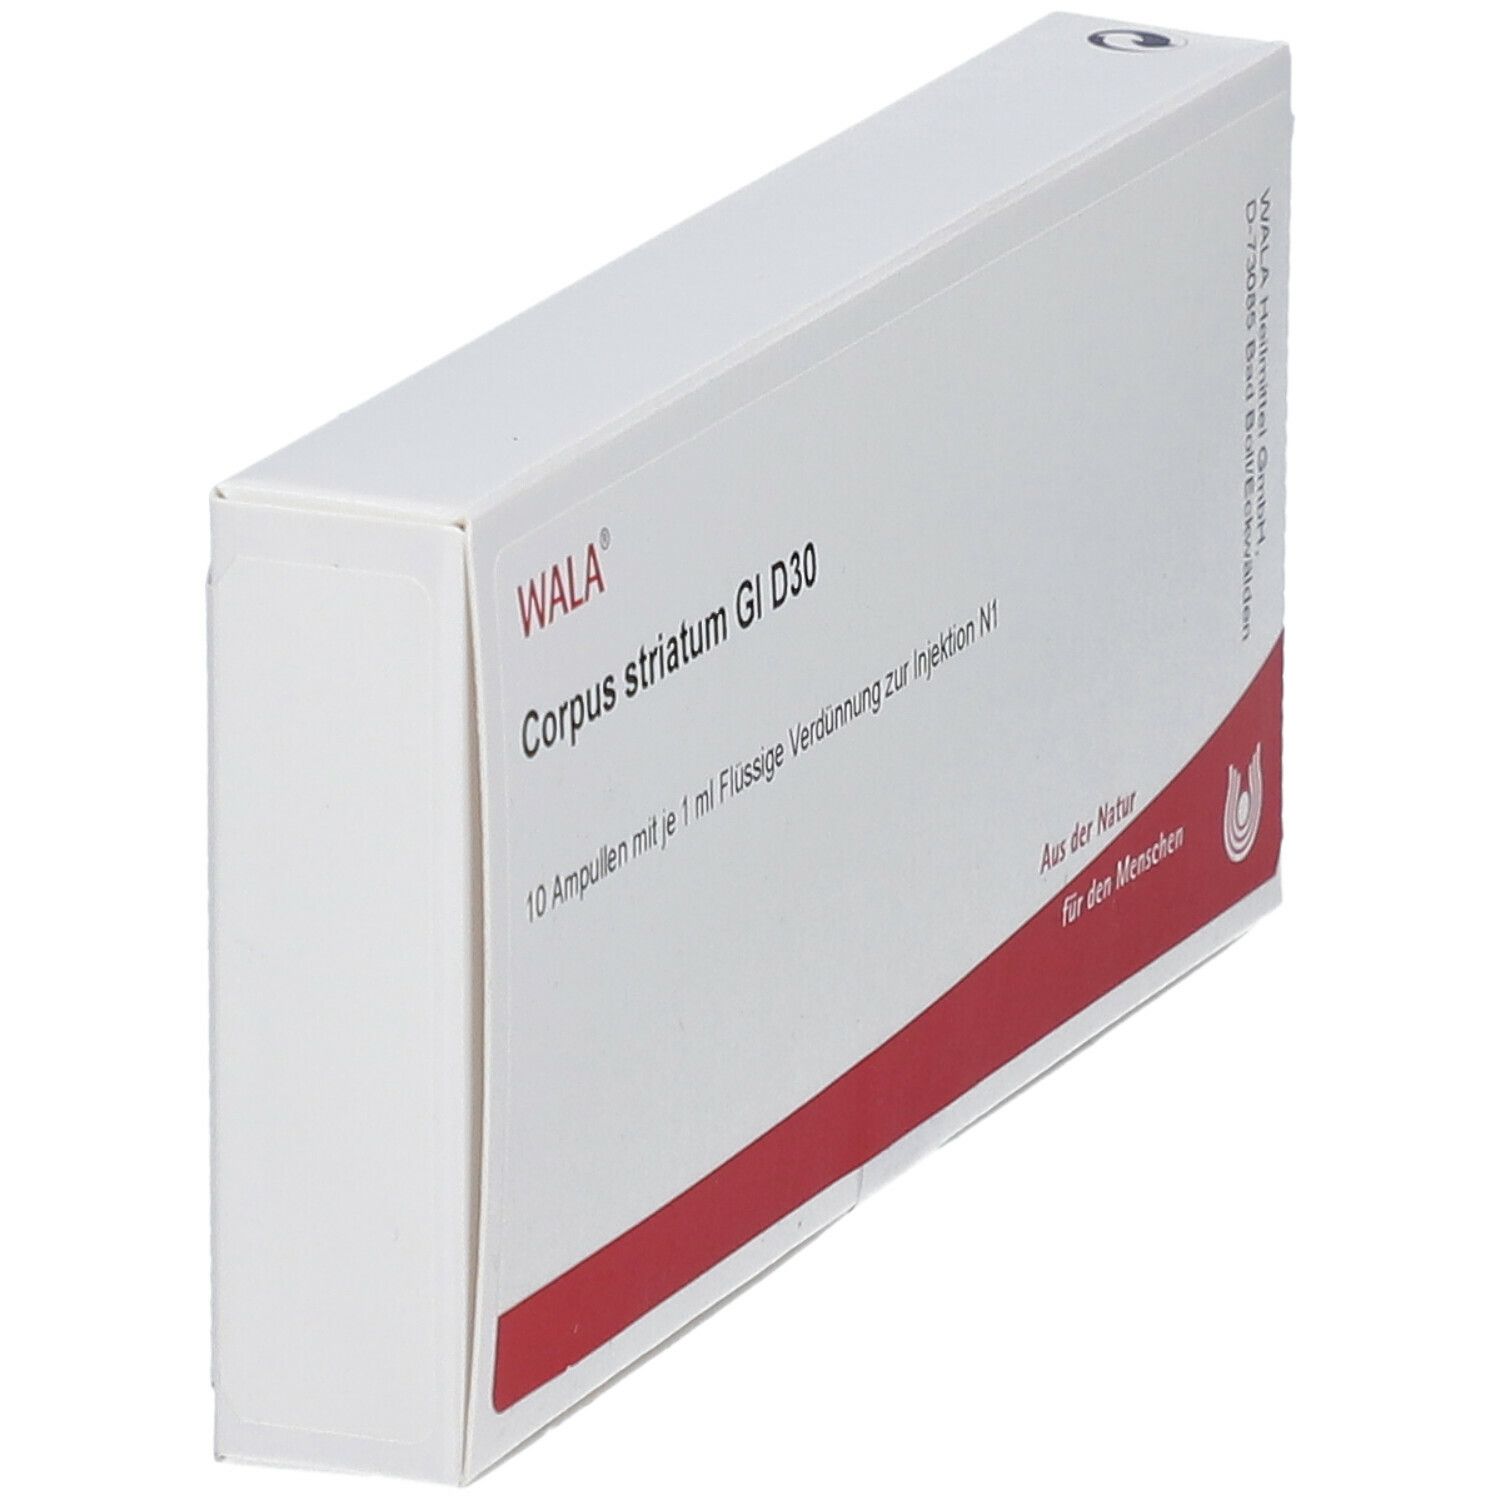 WALA® Corpus striatum Gl D 30